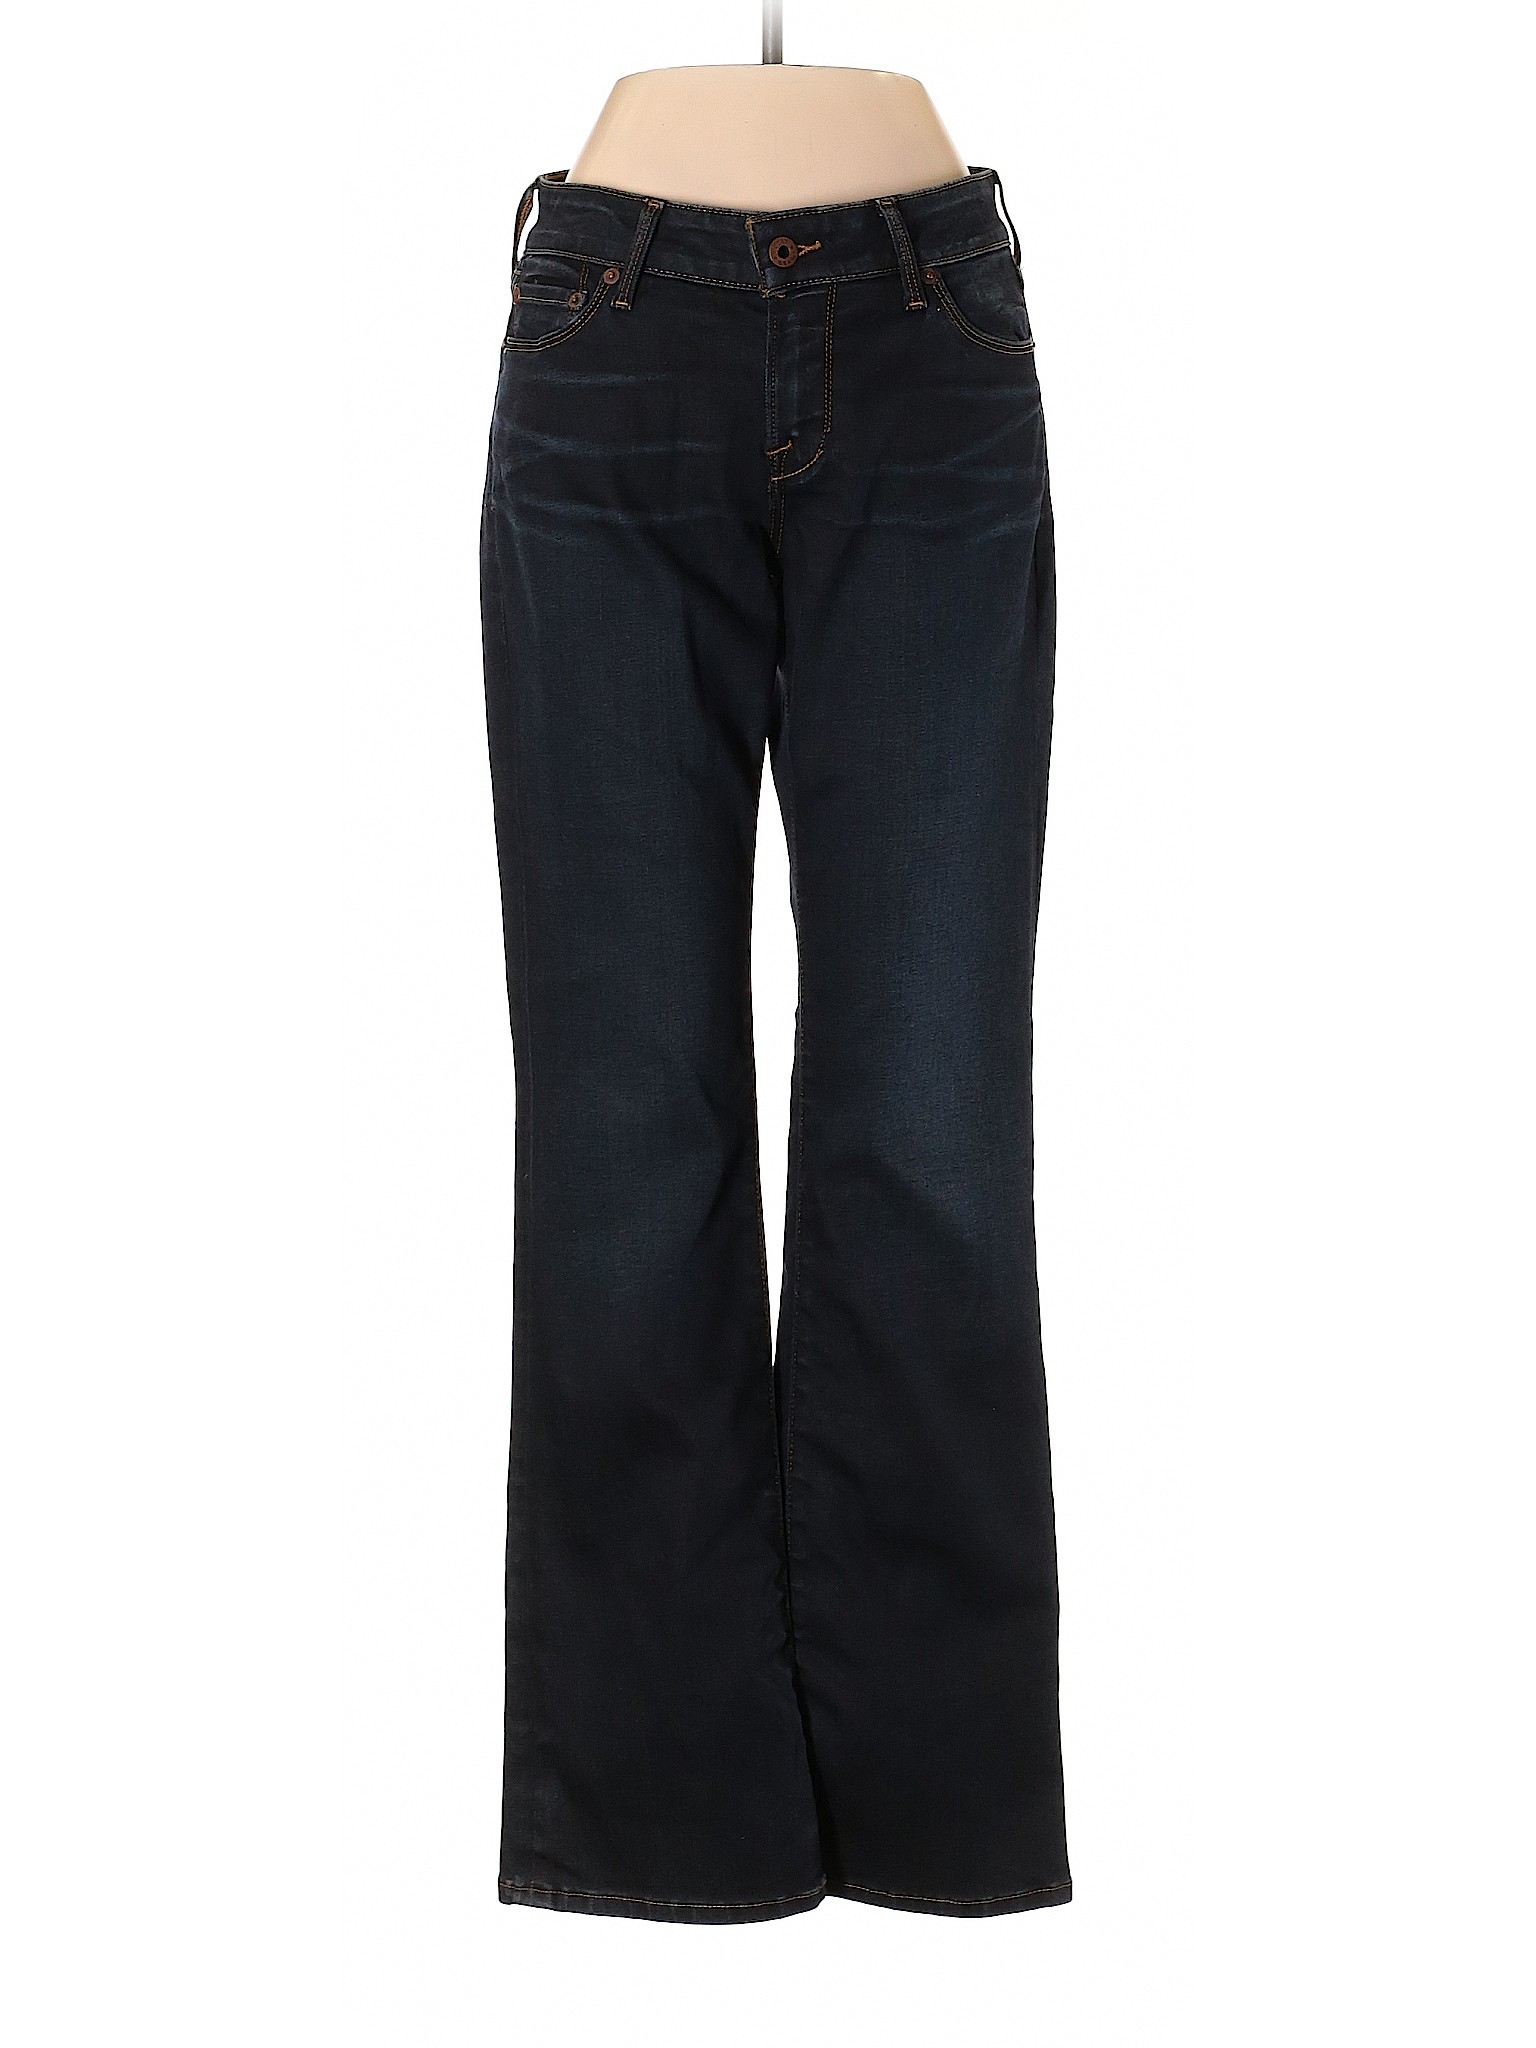 Lucky Brand Women Black Jeans 4 | eBay